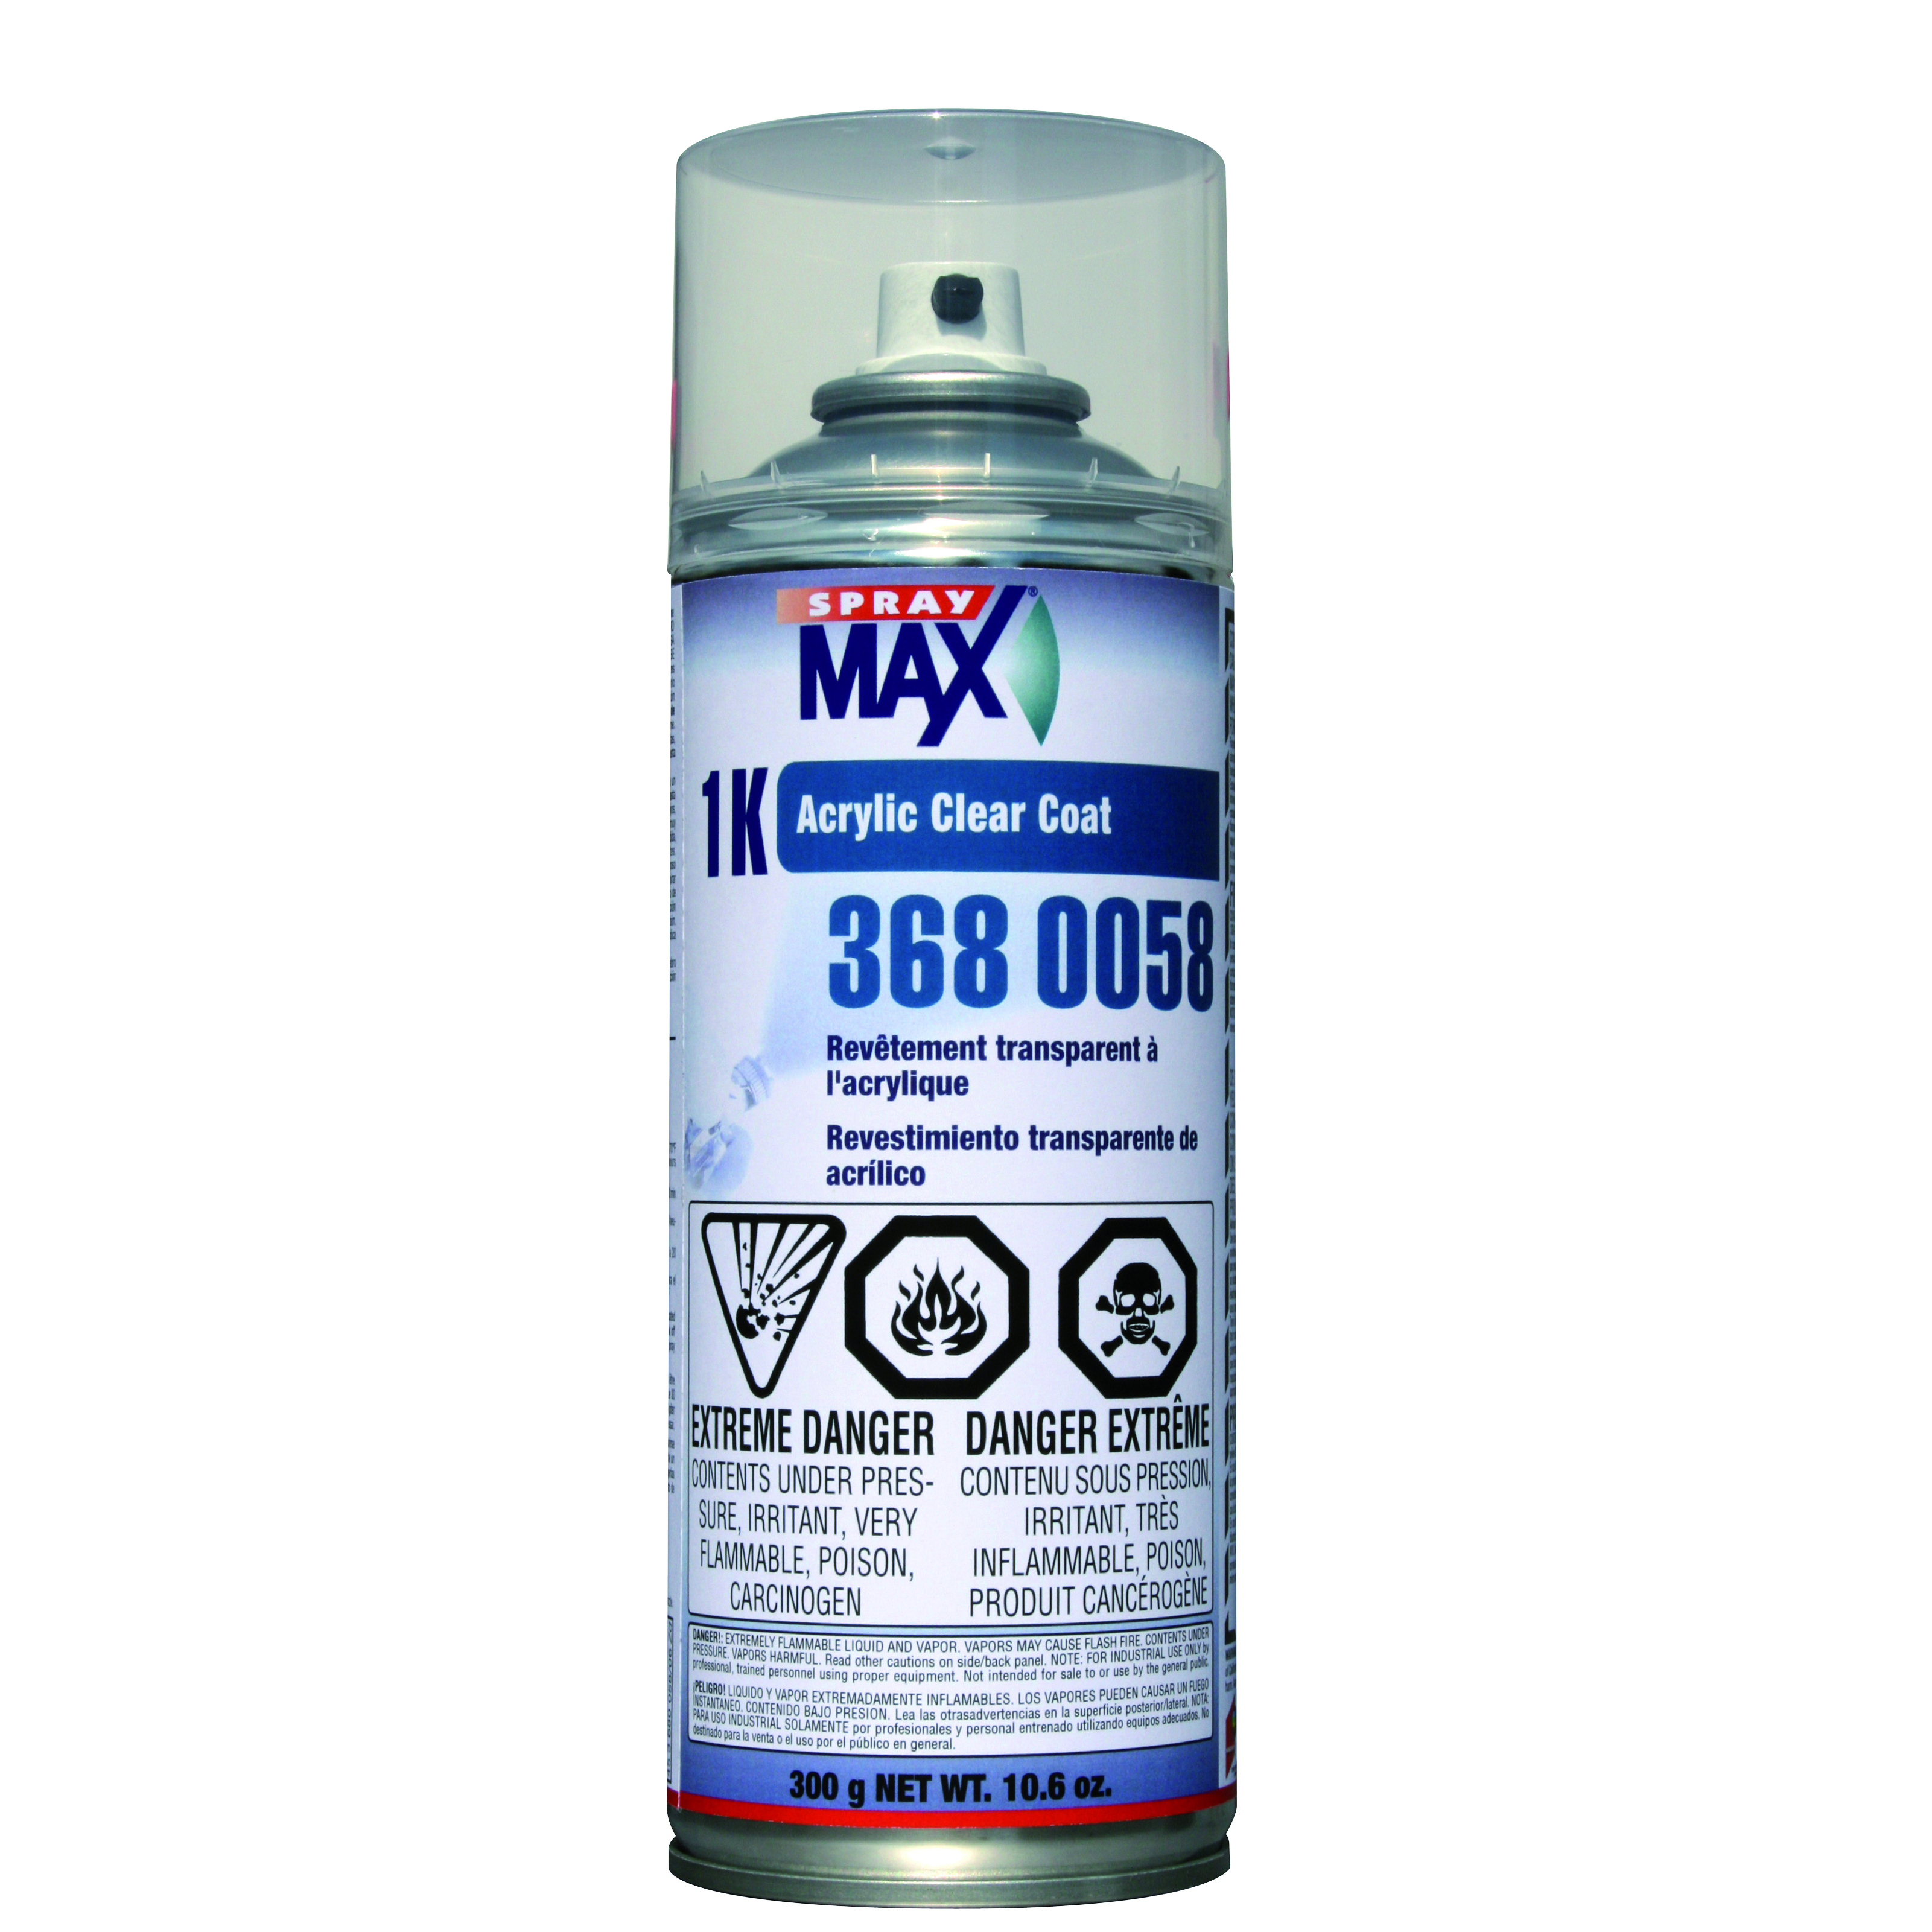 USC-3680058-SprayMax-Acrylic-Clear-Coat